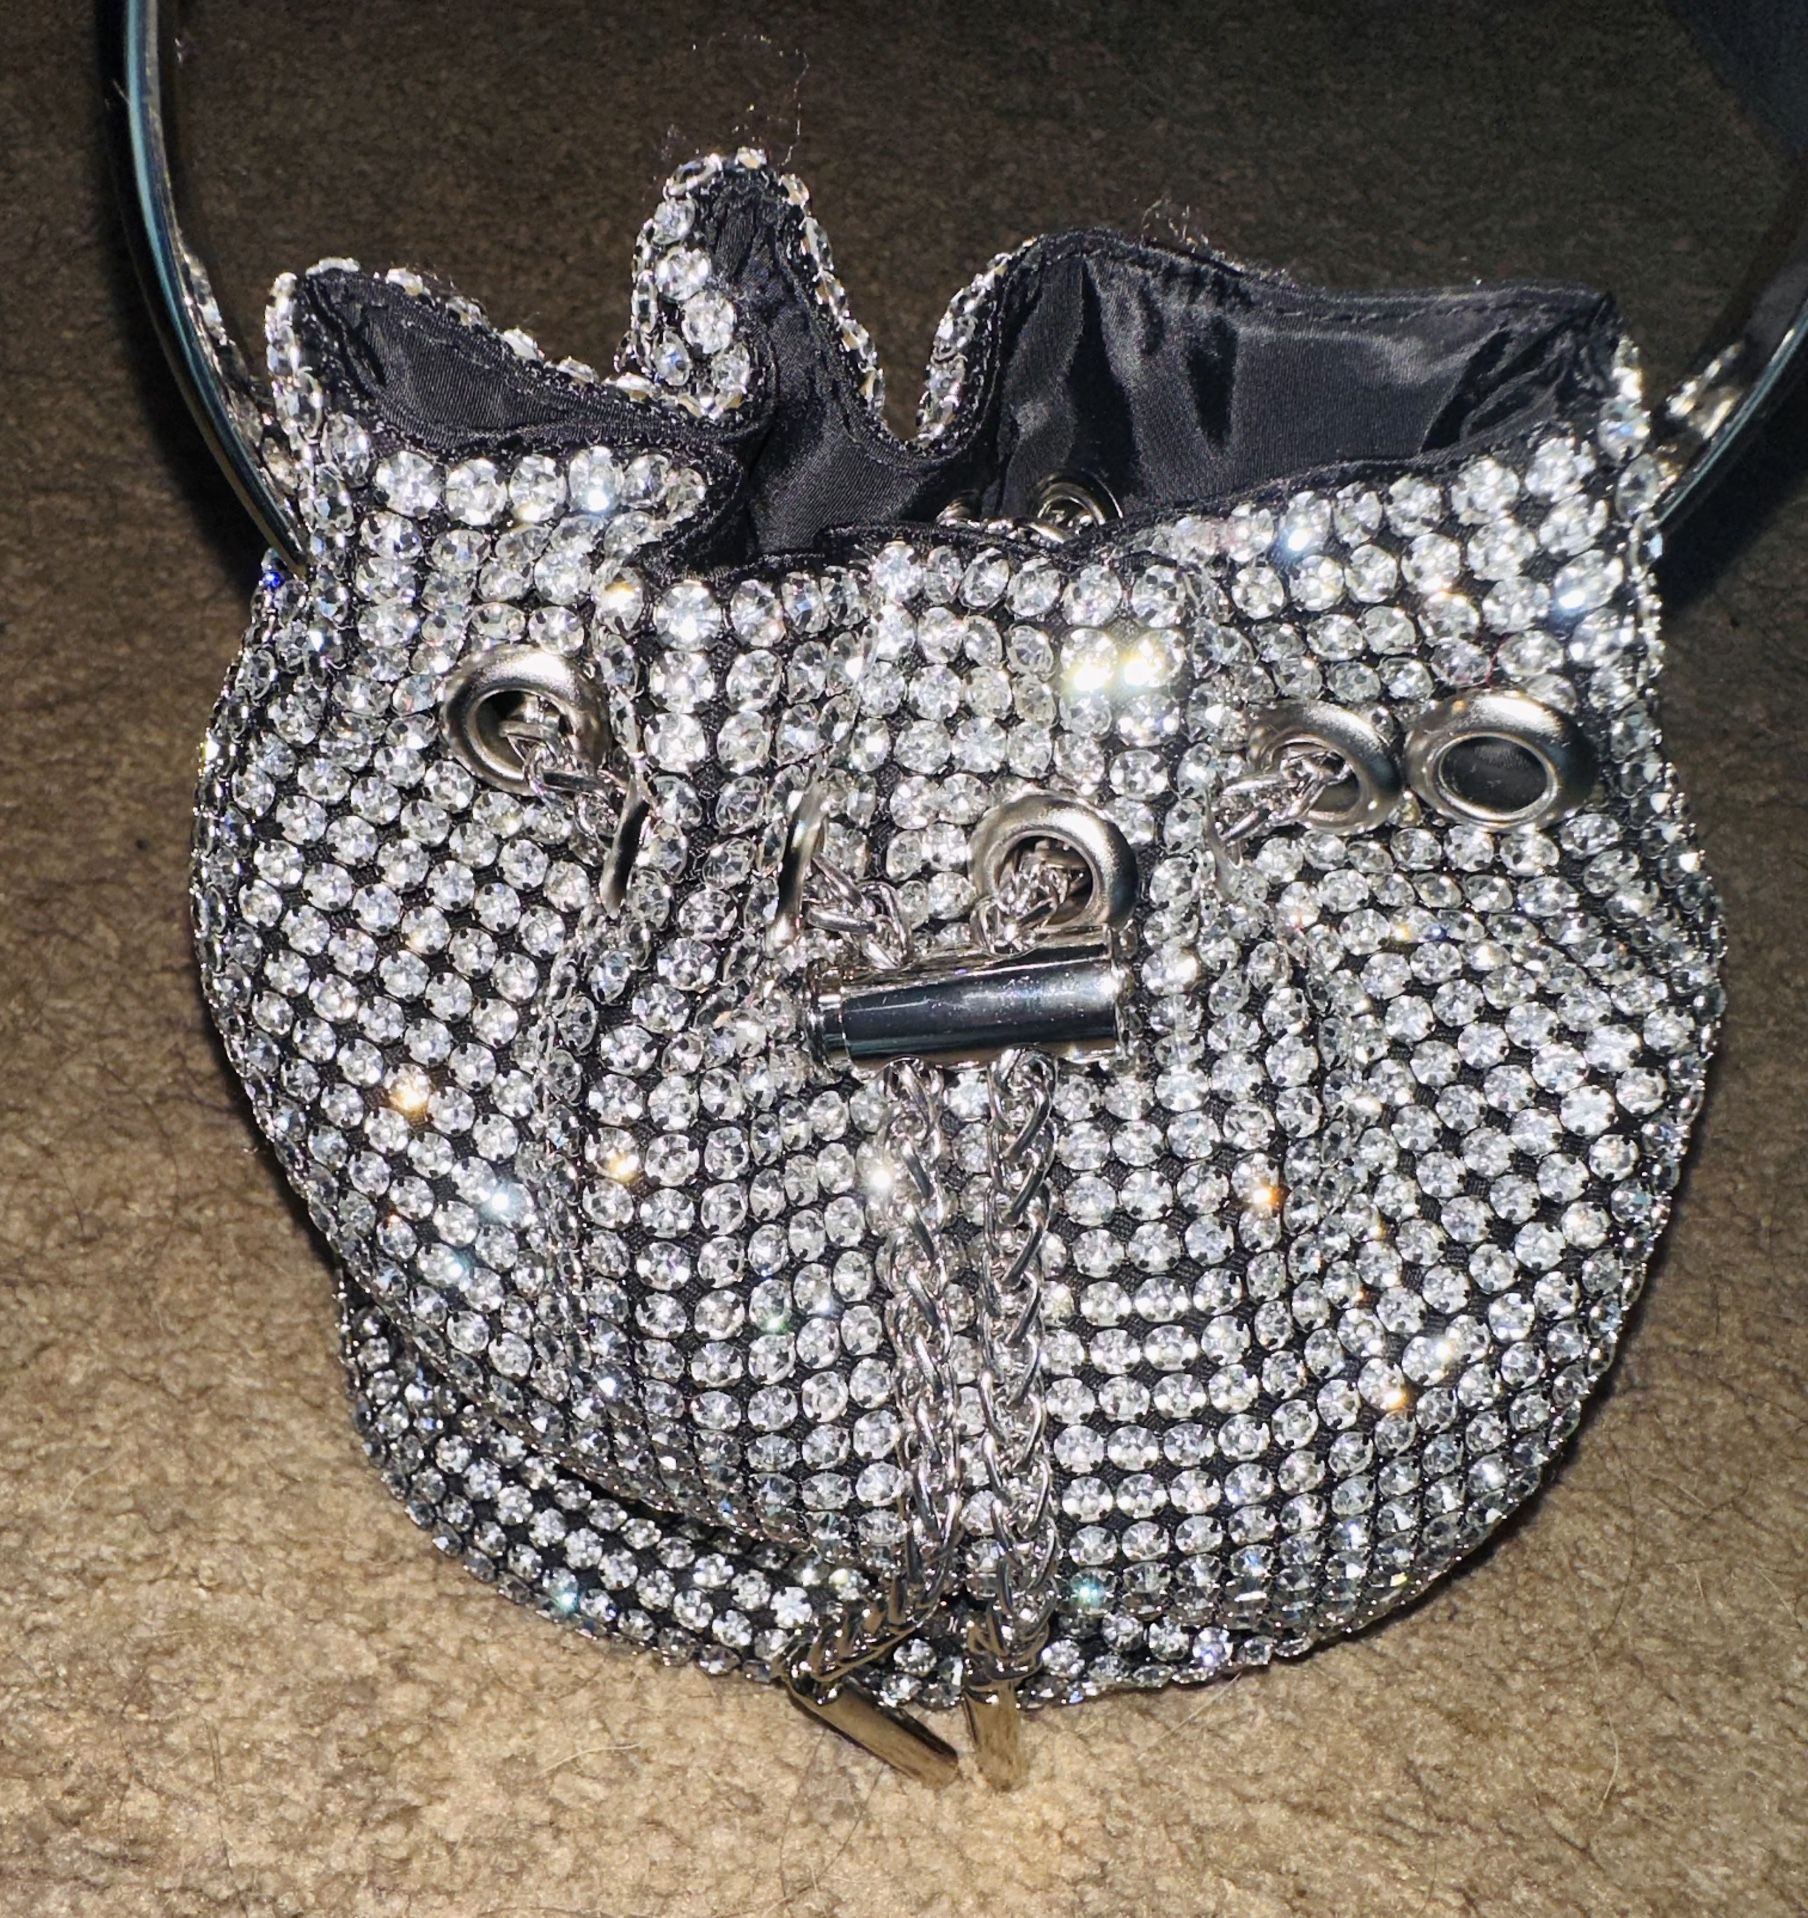 New!! Rhinestone Handbag PRICE IS FIRM